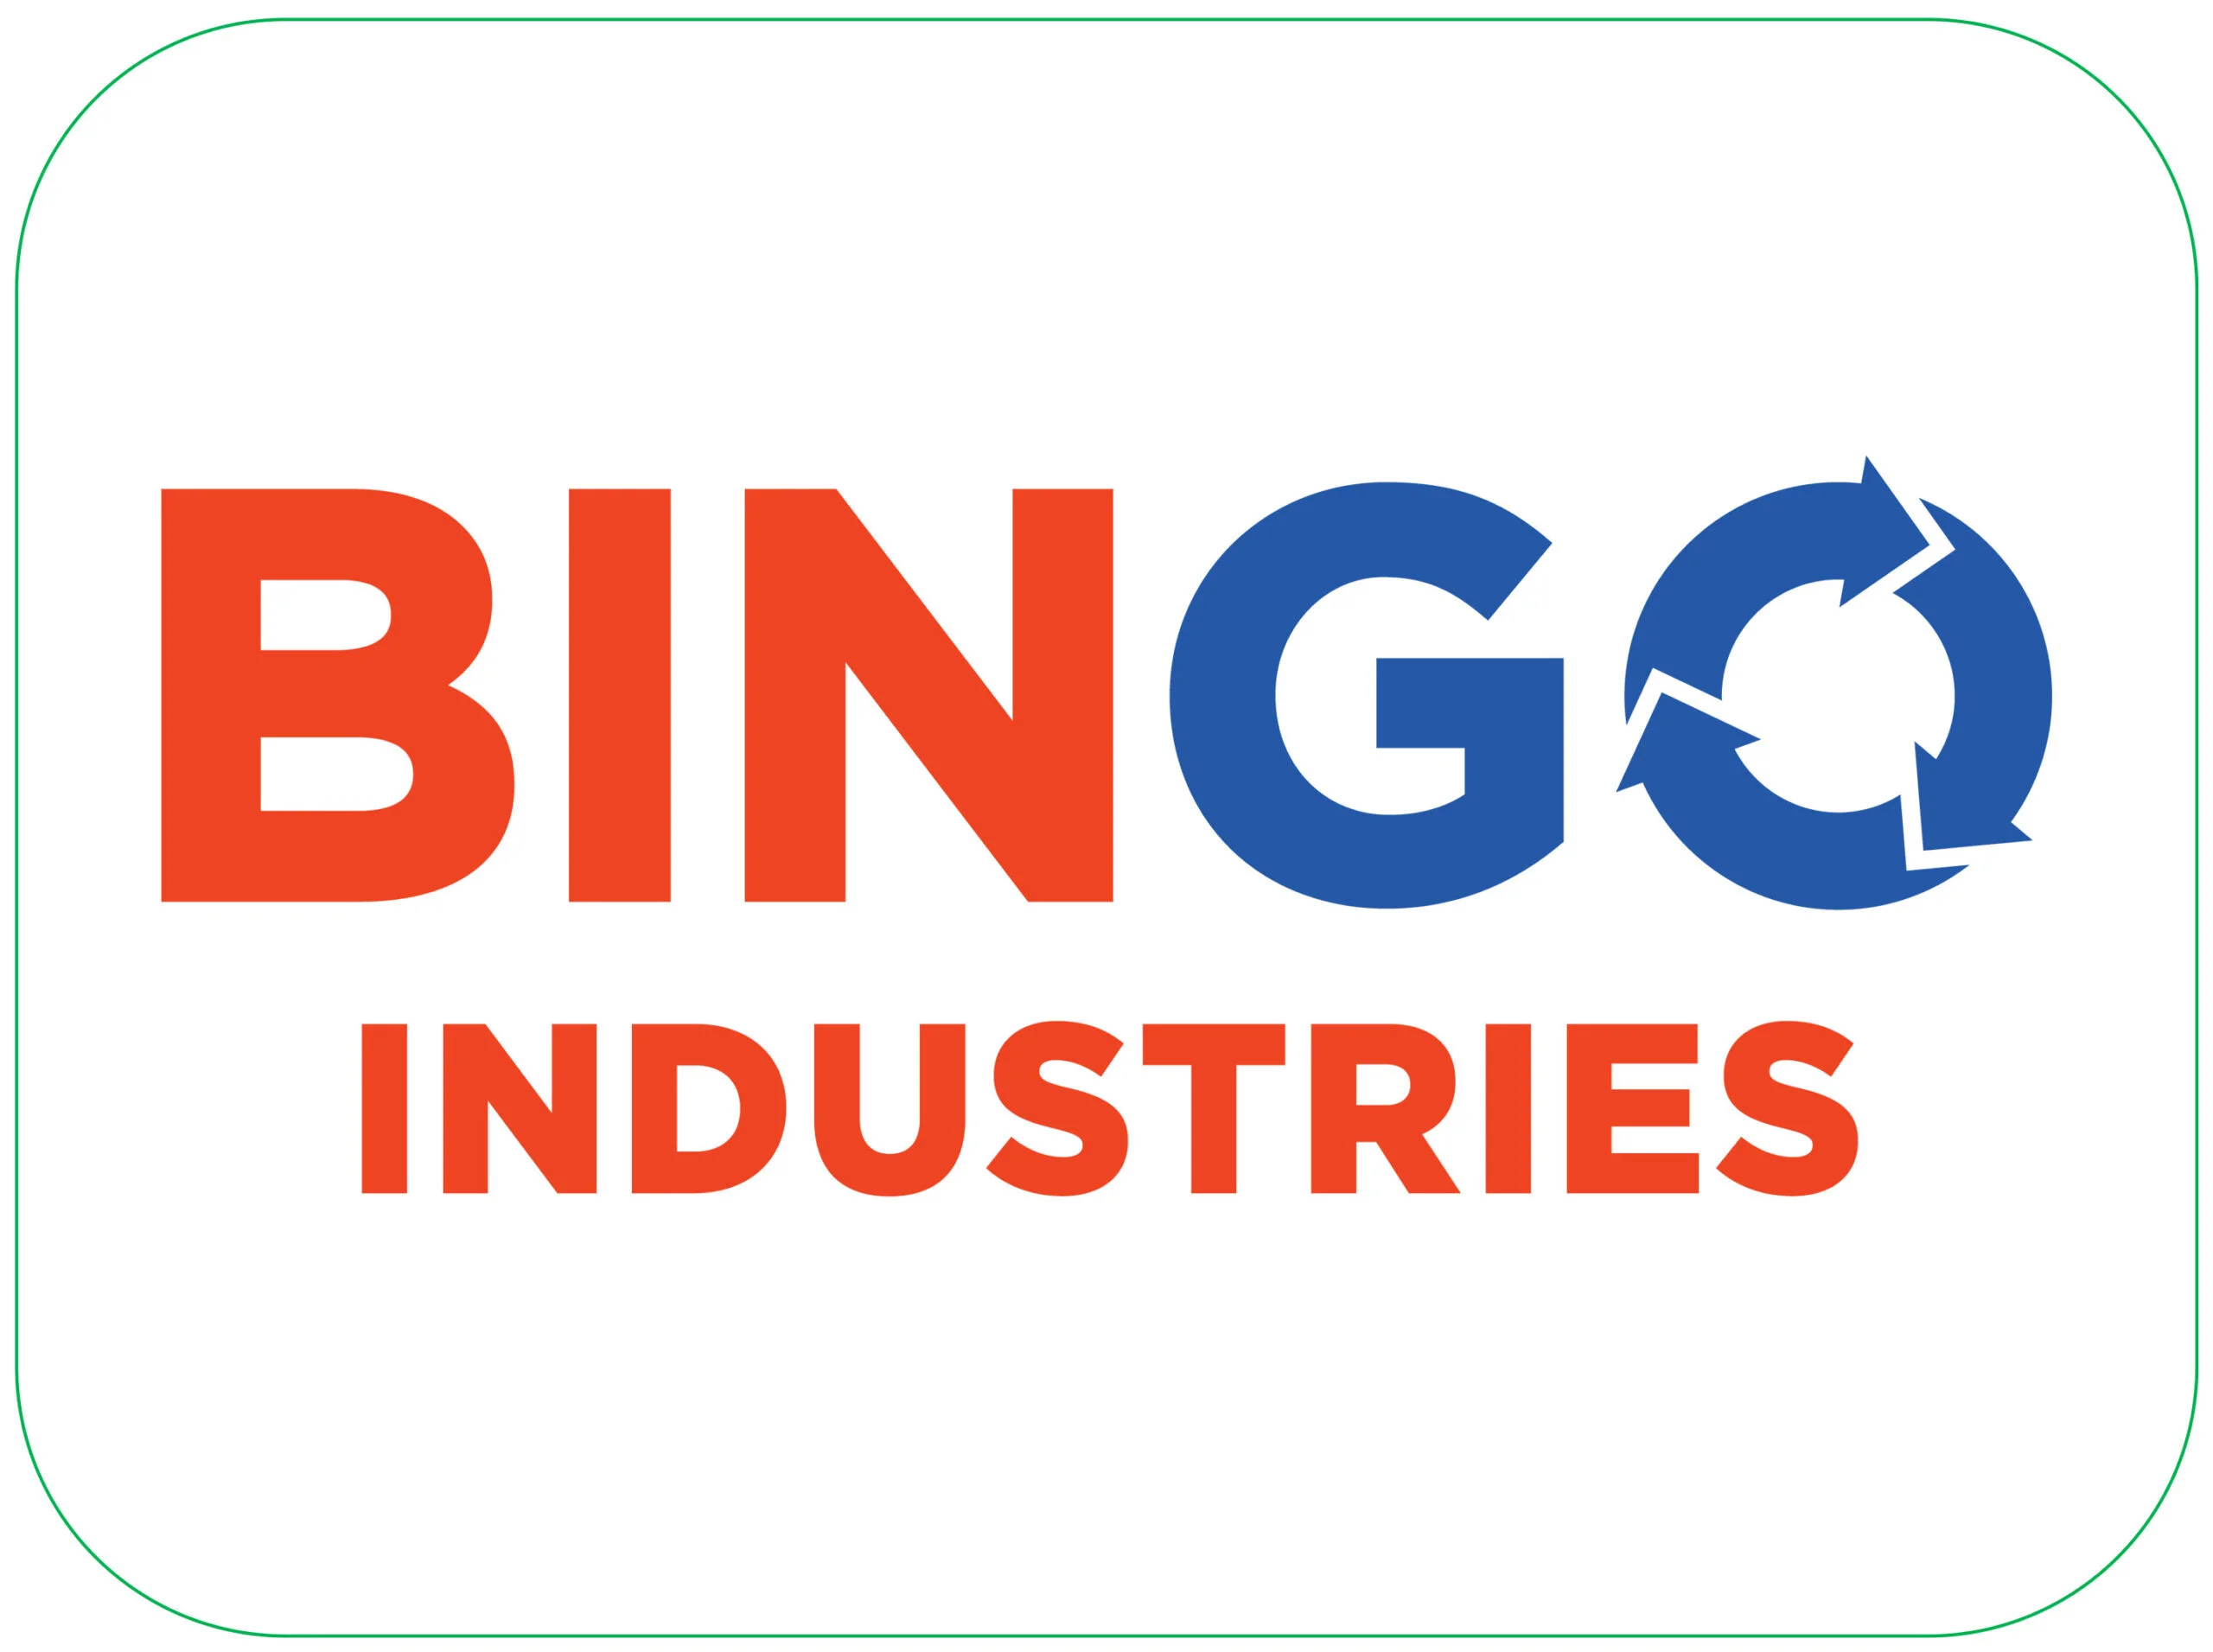 Bingo Industries Logo